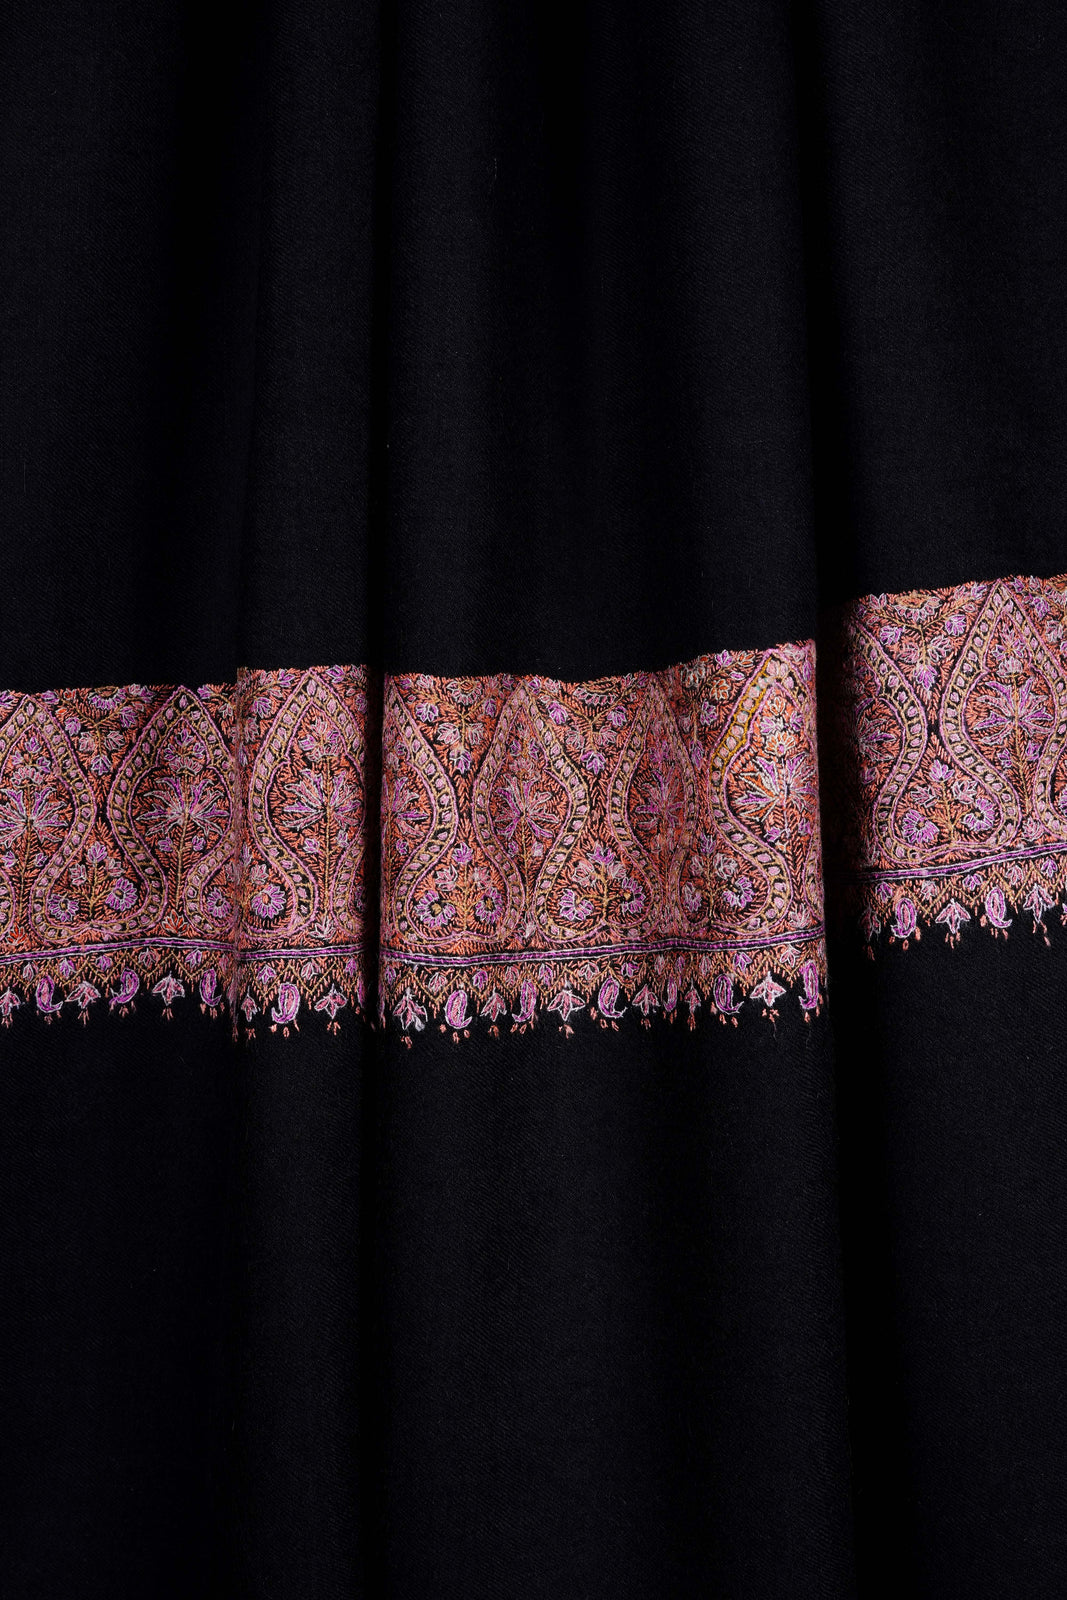 Black Border Embroidery Cashmere Pashmina Shawl